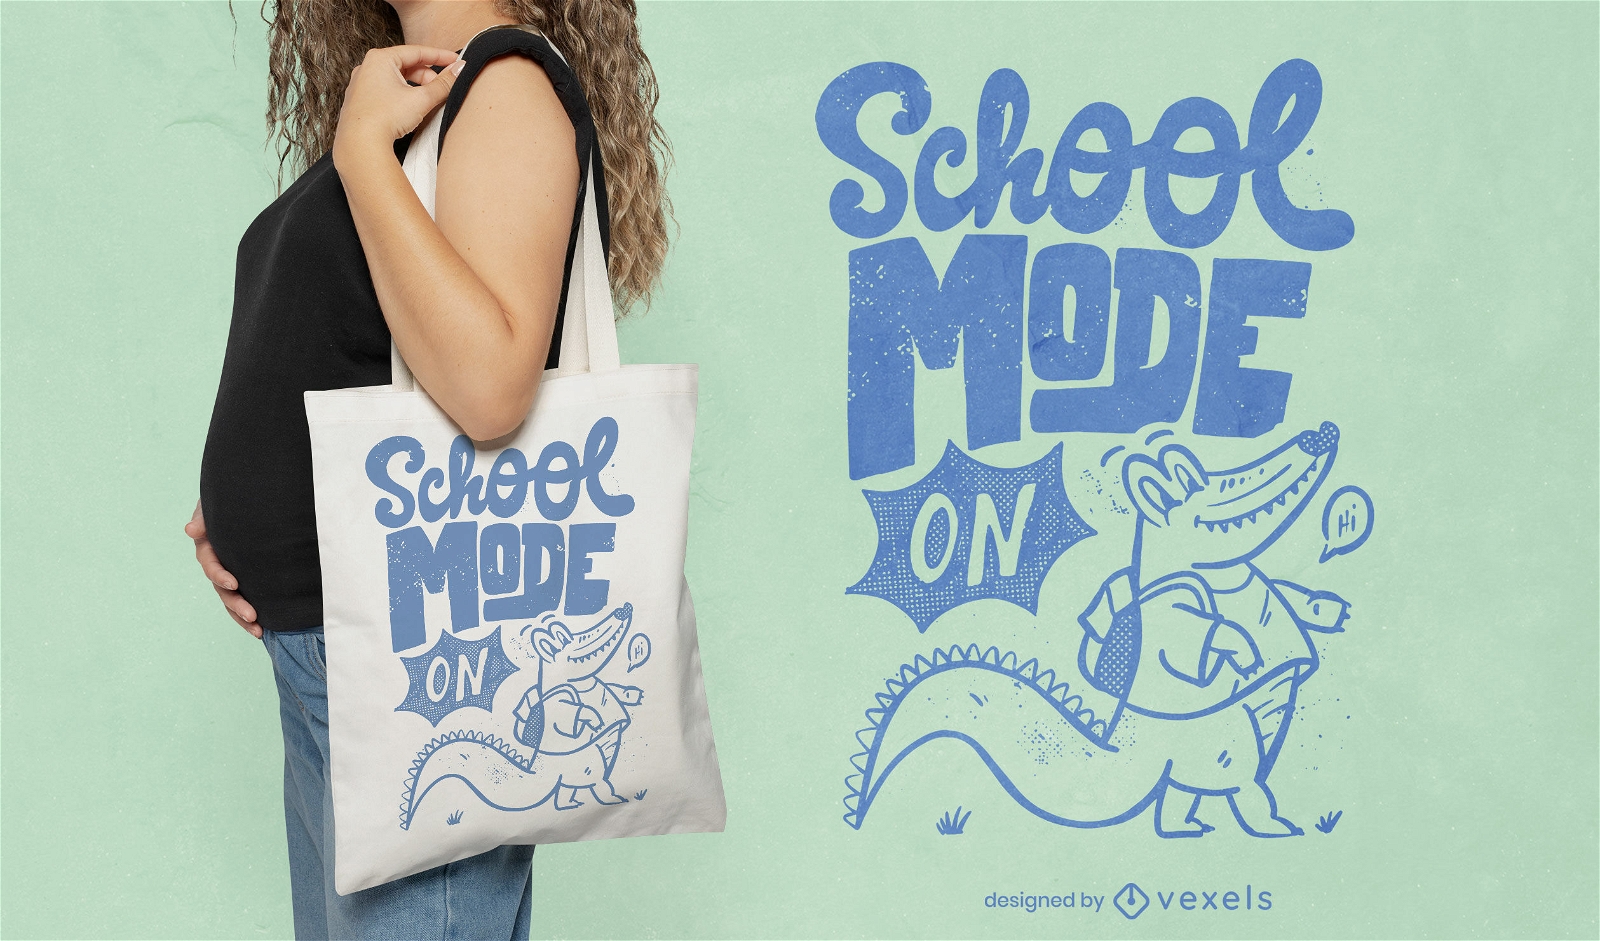 School mode on crocodile tote bag design